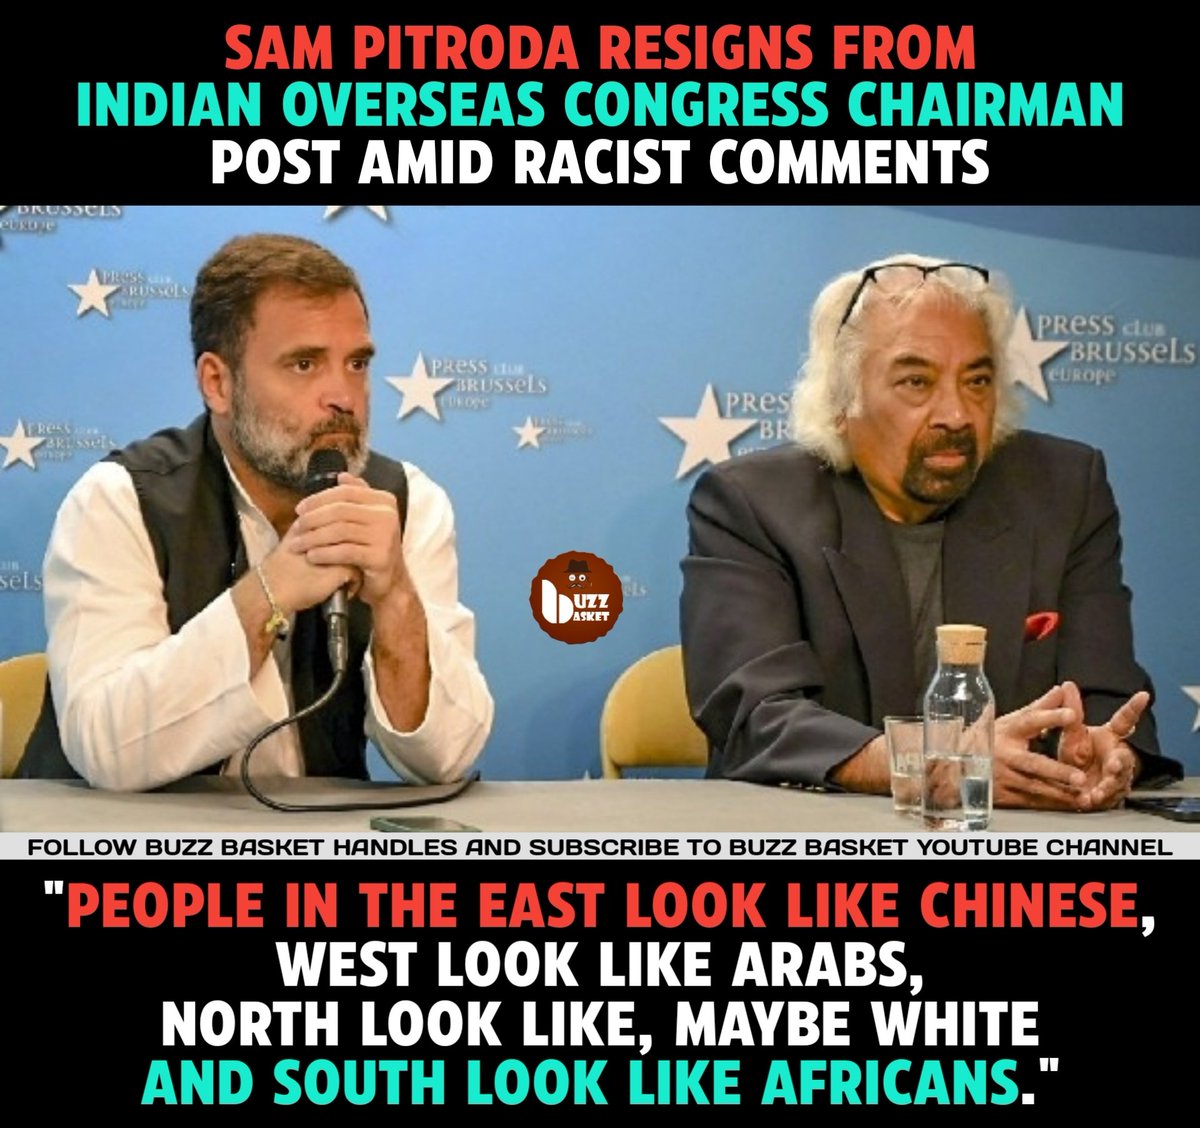 Controversy over #SamPitroda's racist remarks. #Congress #Indians #India